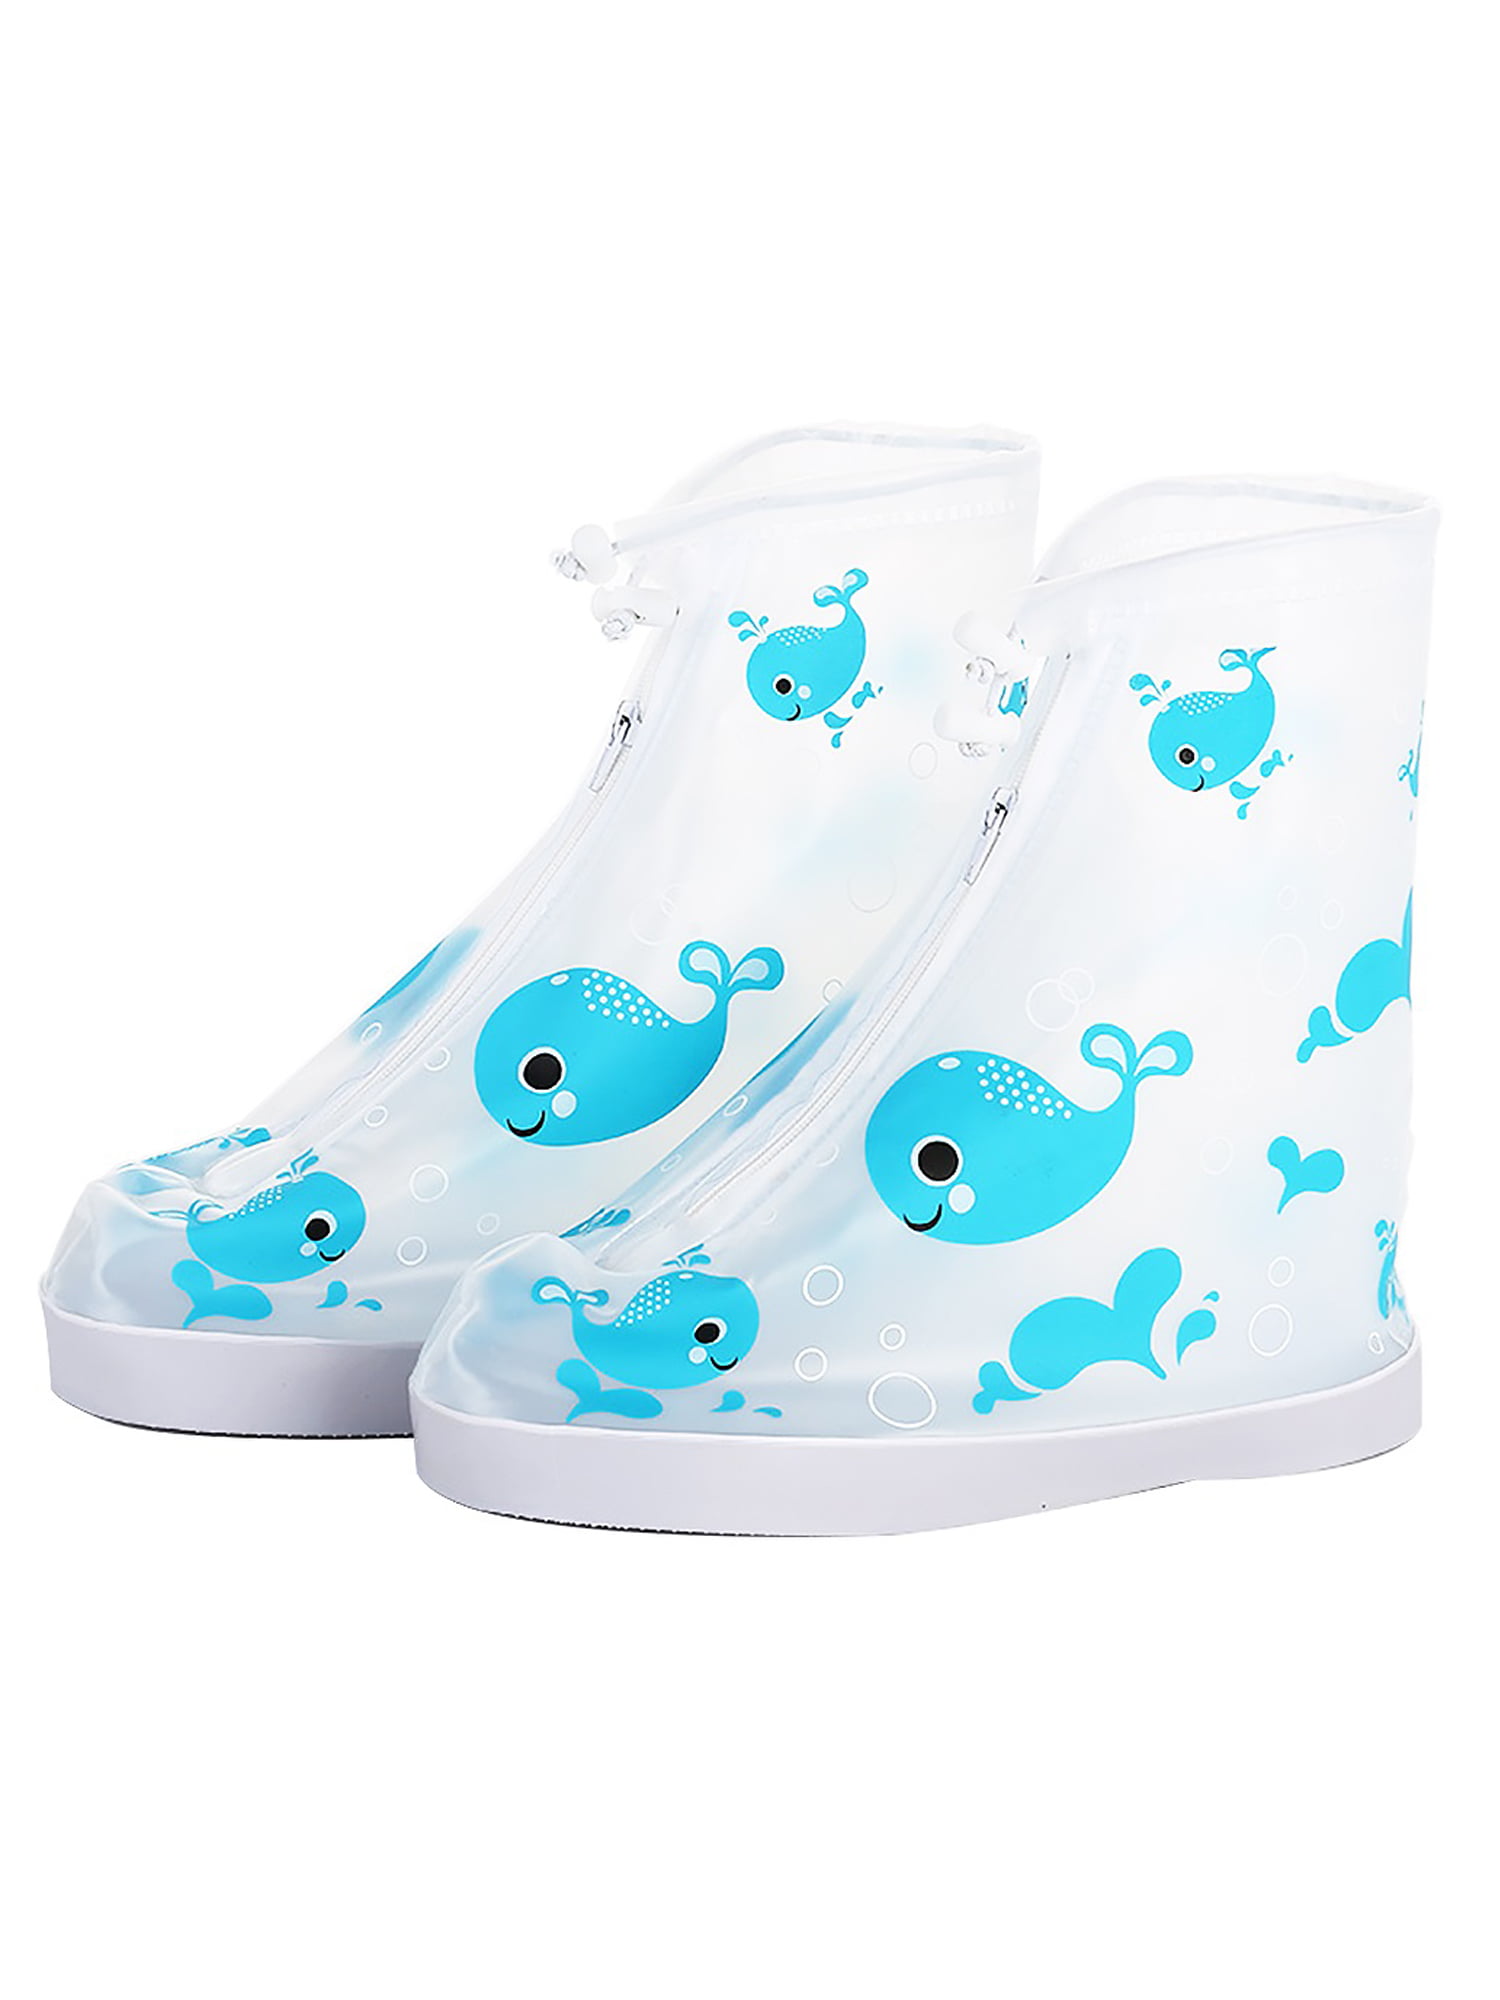 SUNSIOM Children Waterproof Shoes 